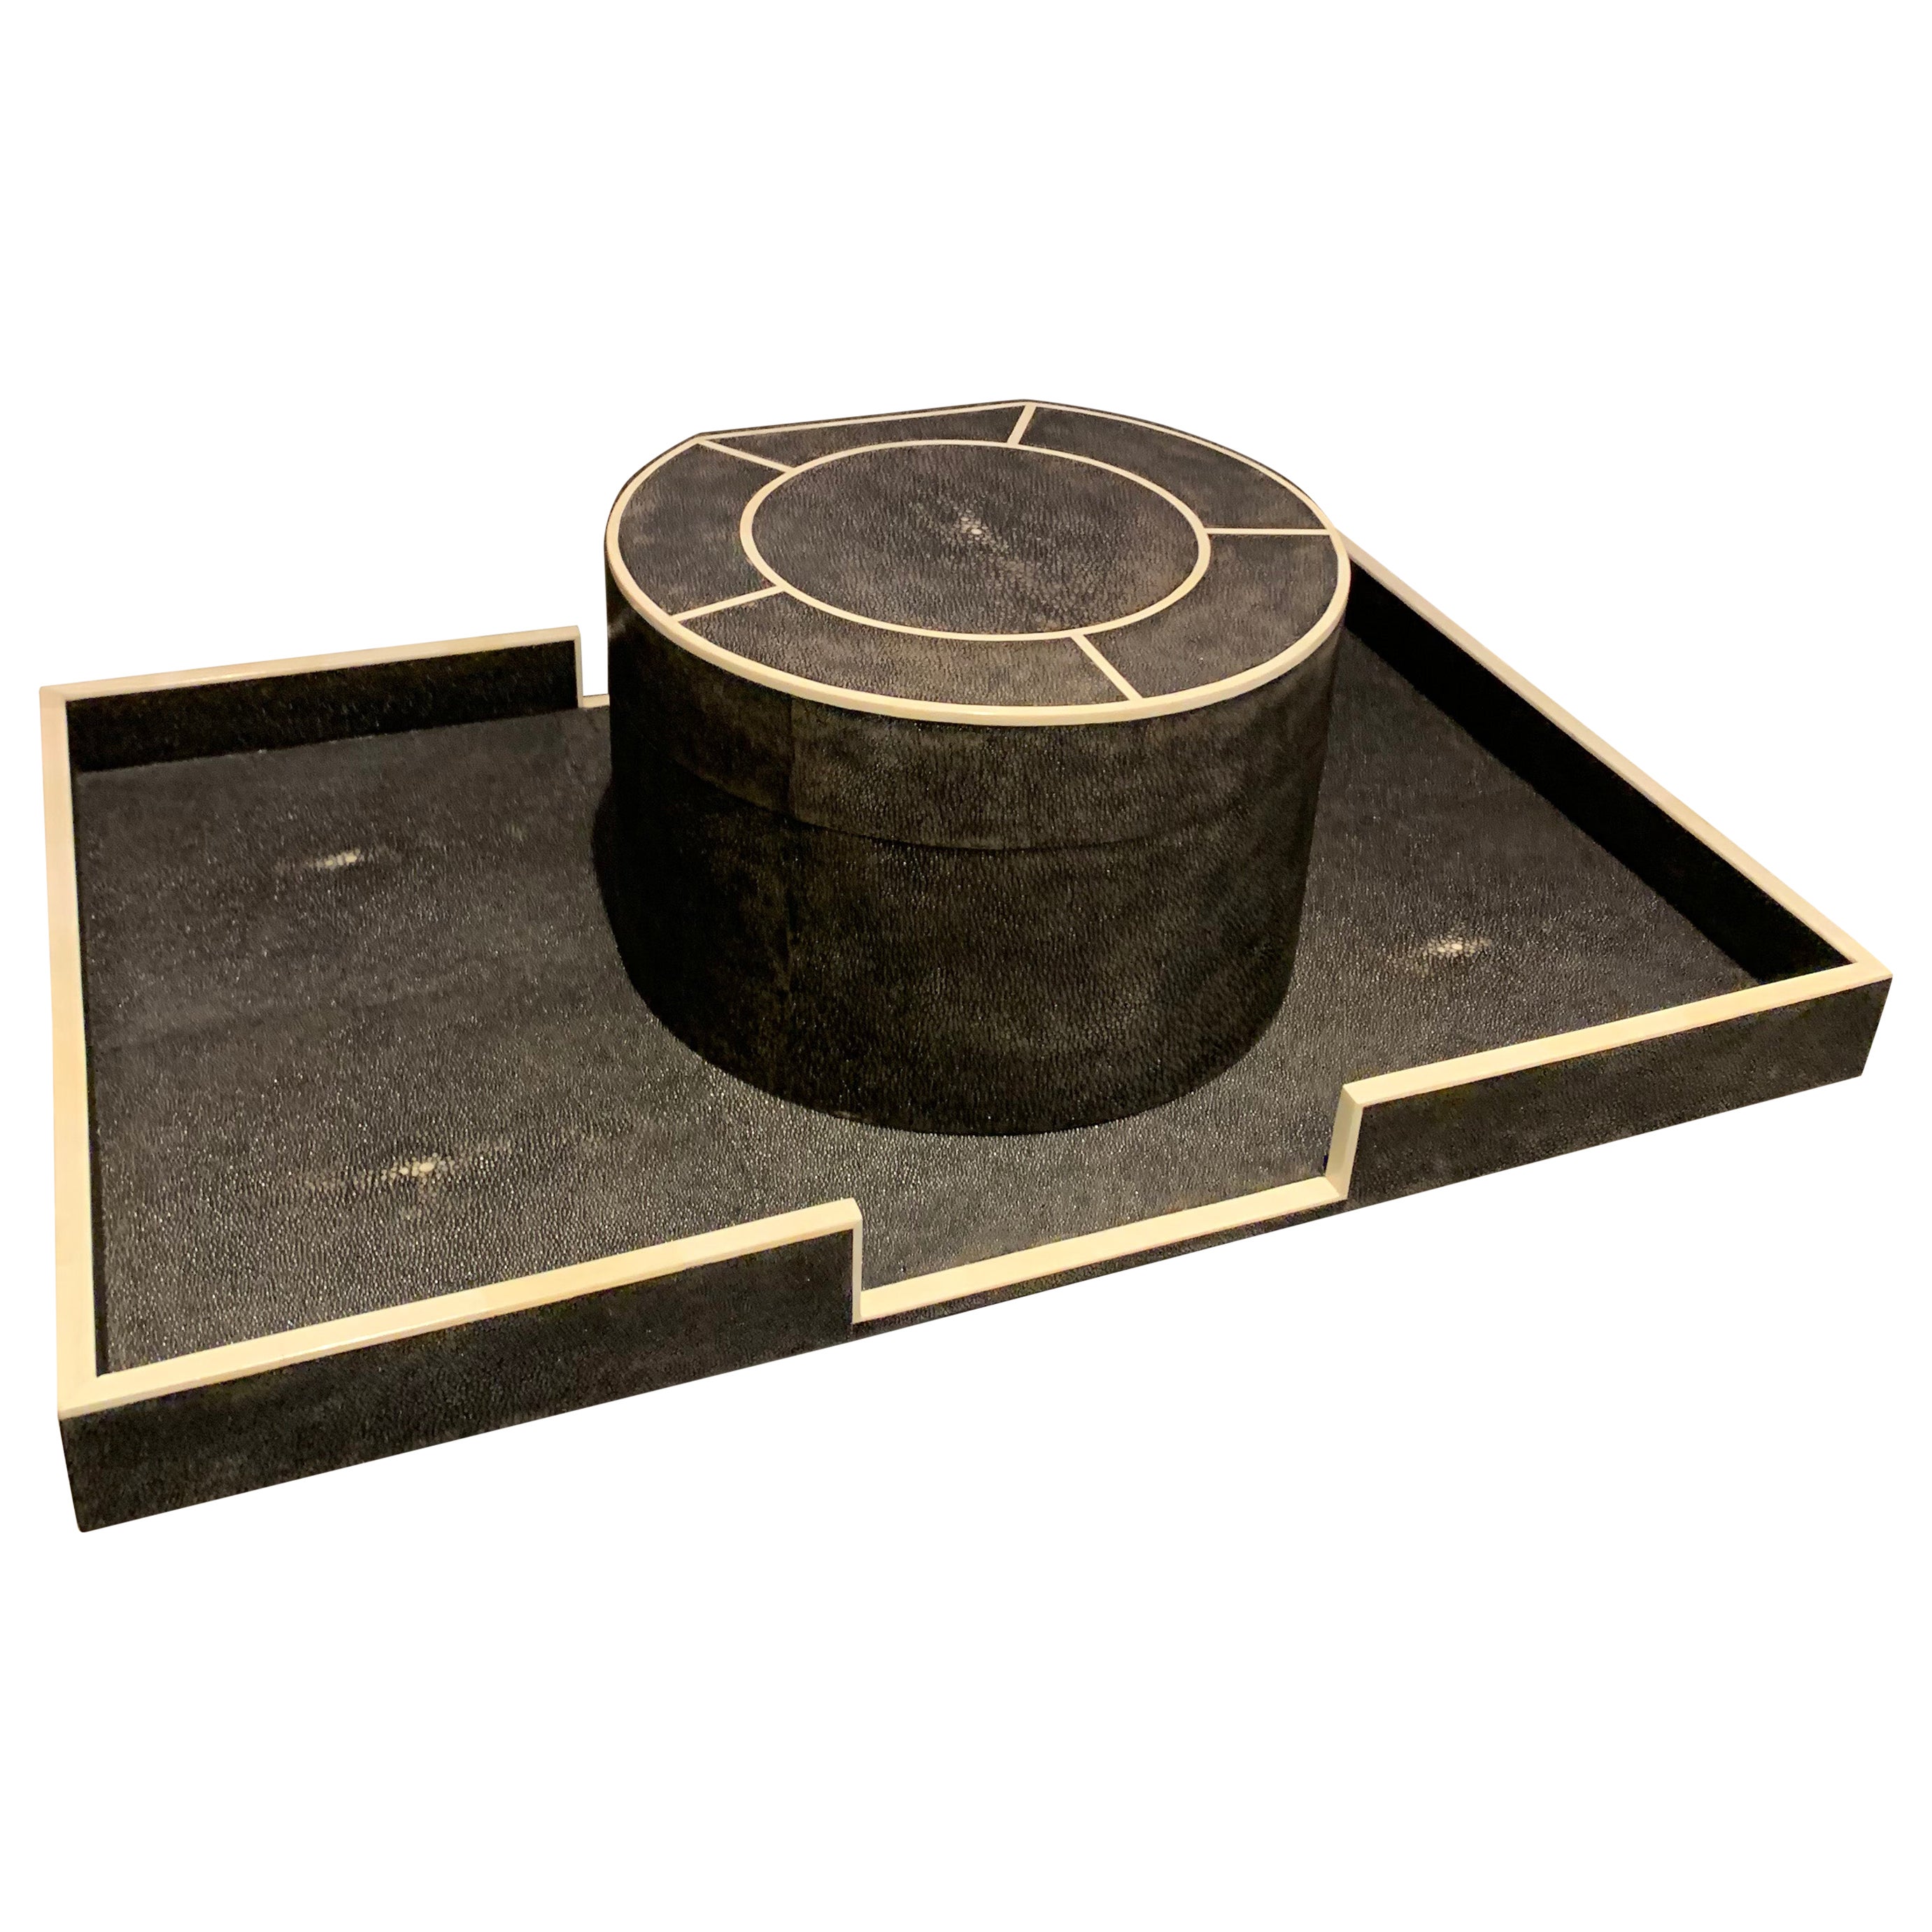 Decorative, Polished Black Shagreen and Bone Trinket Box and Tray Set, Handmade.